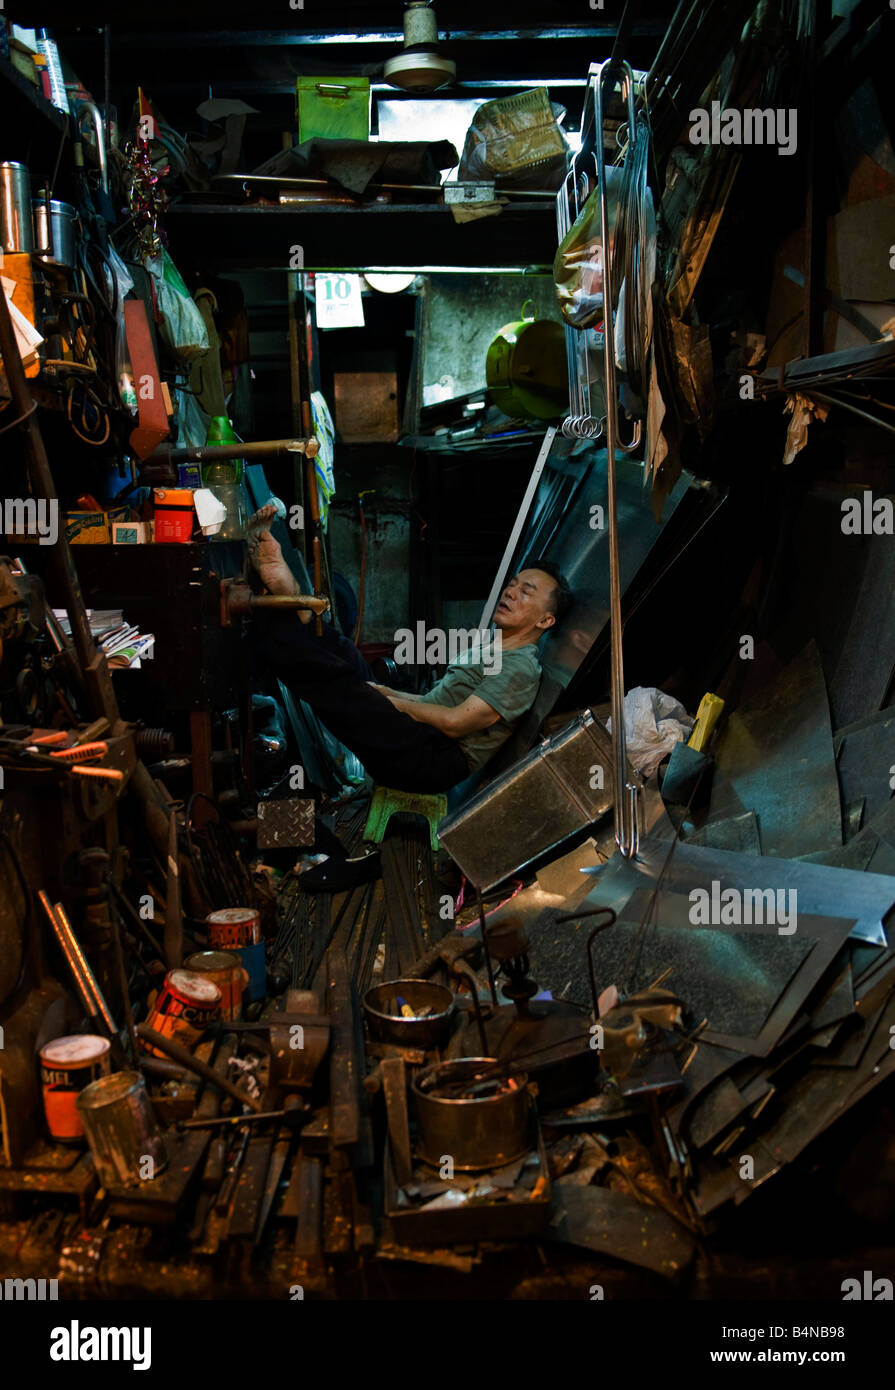 A man sleeps inside his metal shop in downtown Hong Kong Stock Photo